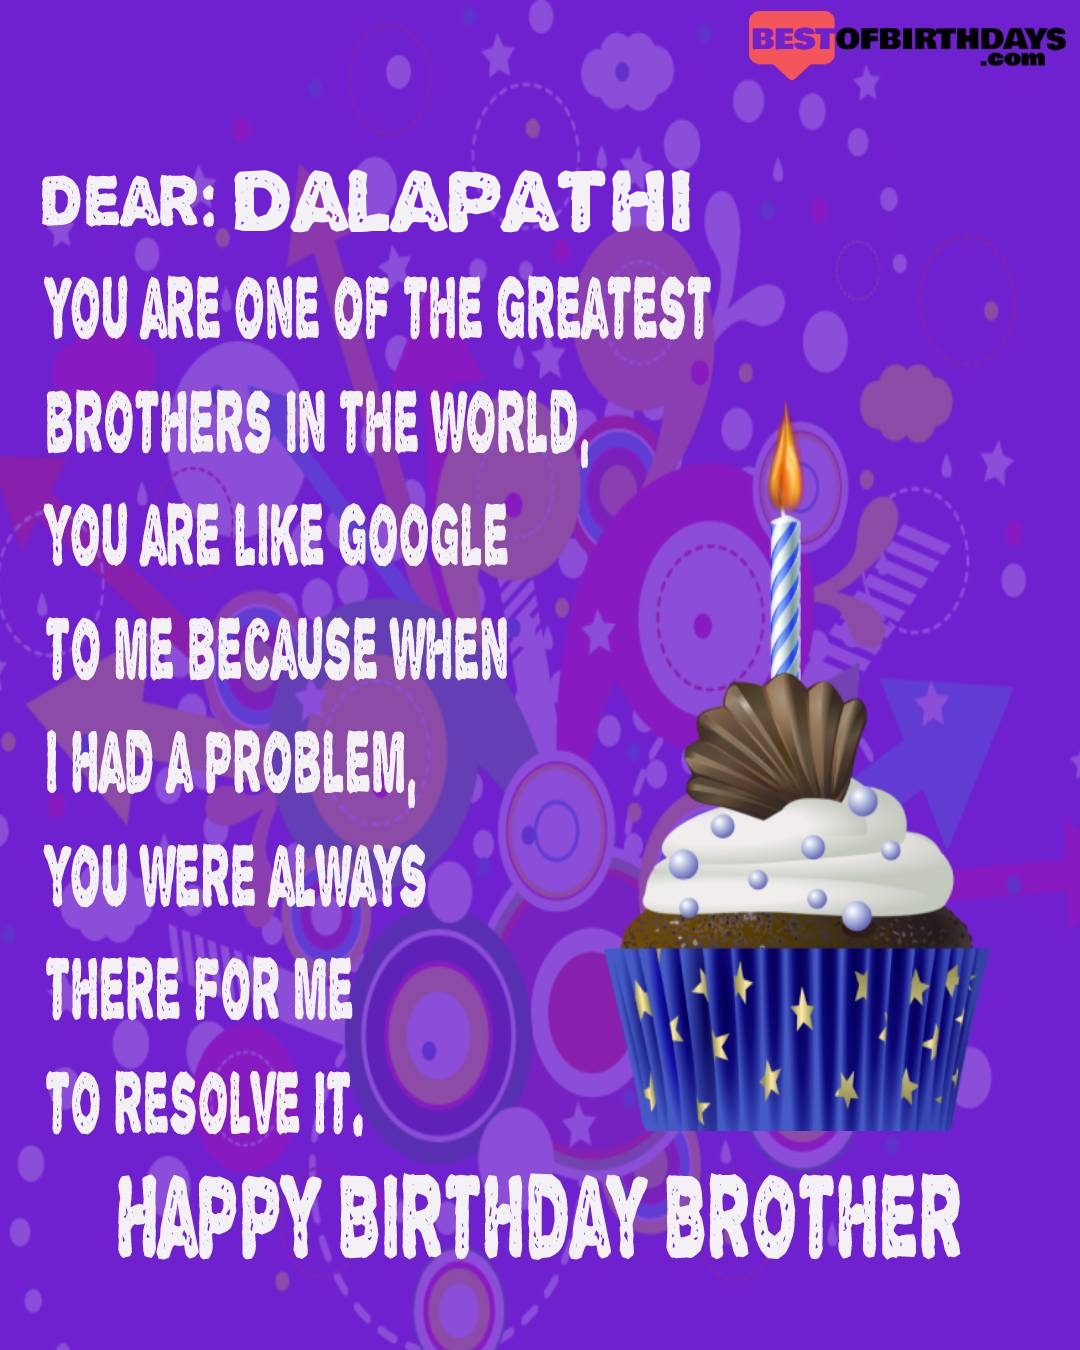 Happy birthday dalapathi bhai brother bro